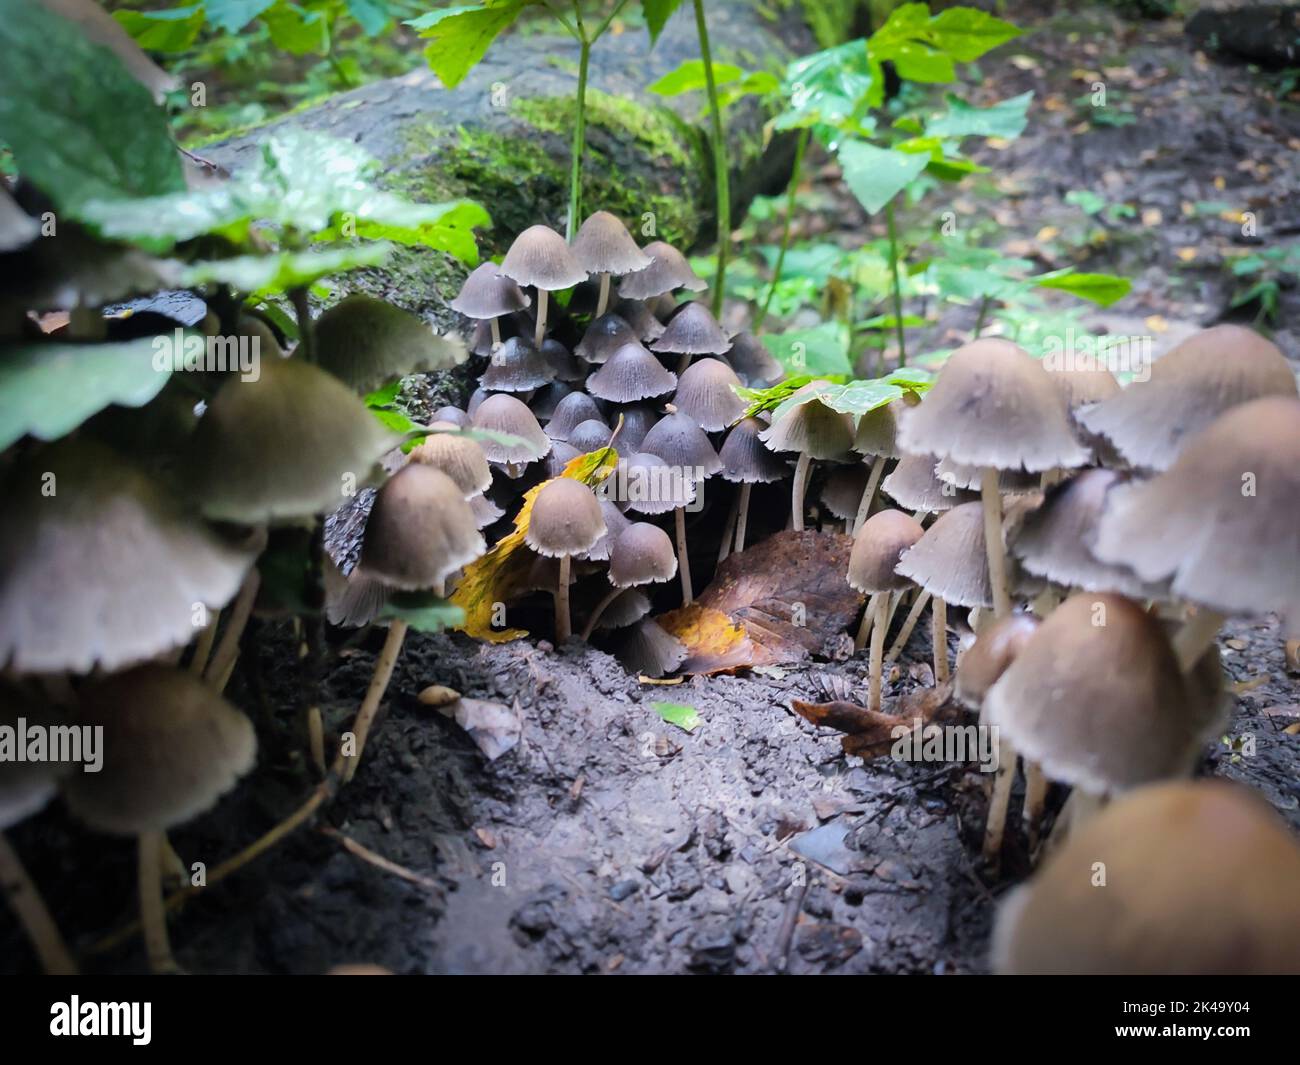 Group of Coprinellus Disseminatus mushrooms or Fairy Inkcap in wild autumn forest Stock Photo